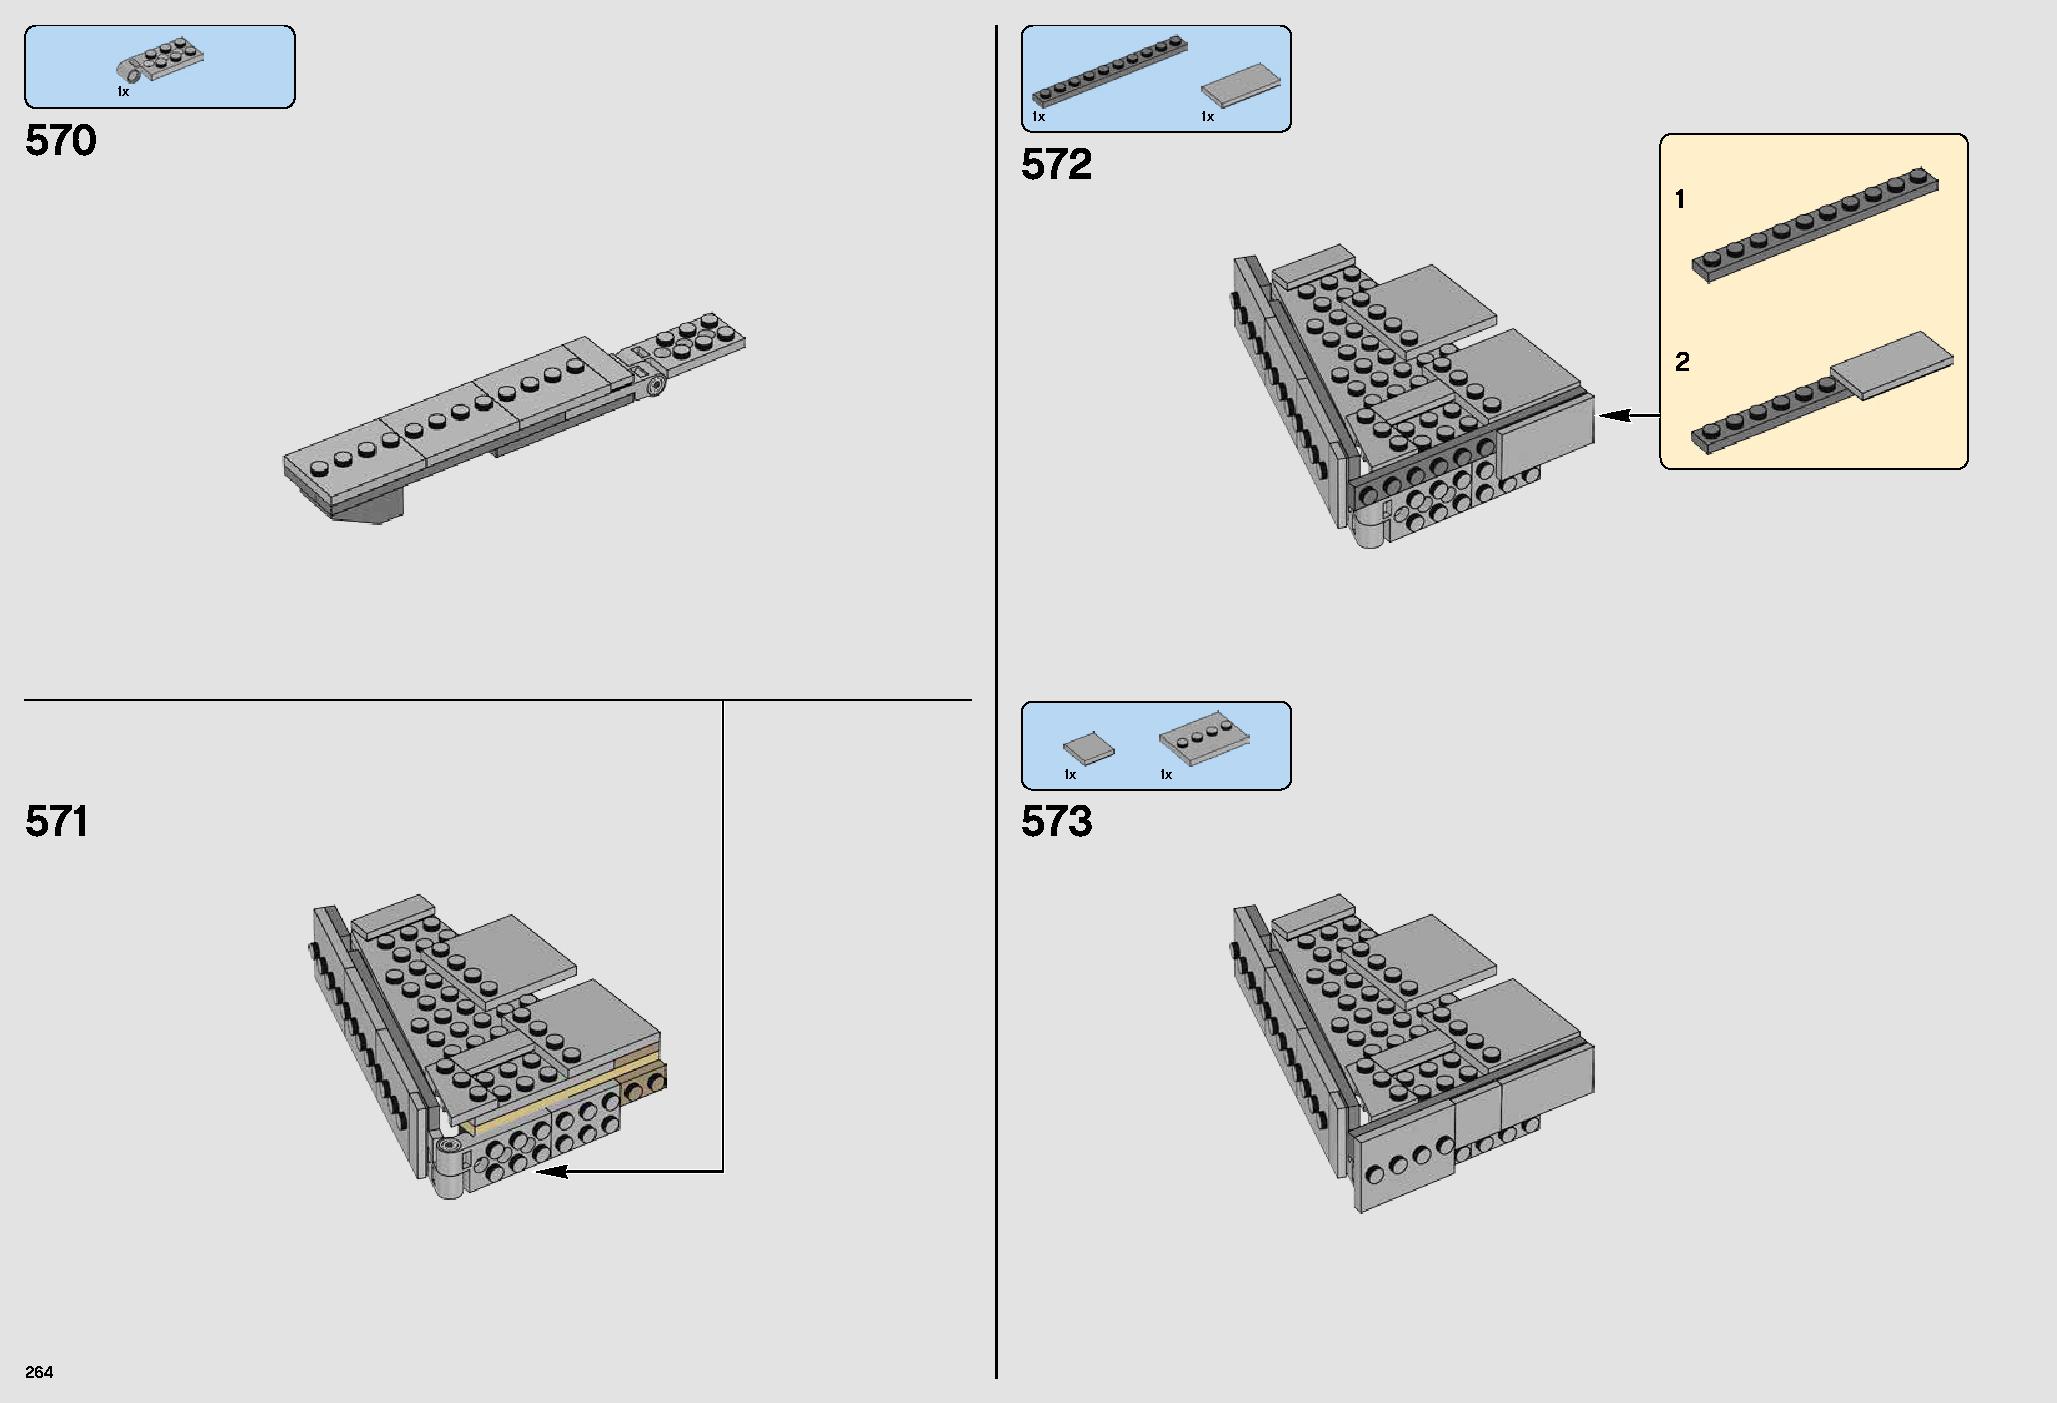 UCS Millennium Falcon 75192 LEGO information LEGO instructions 264 page